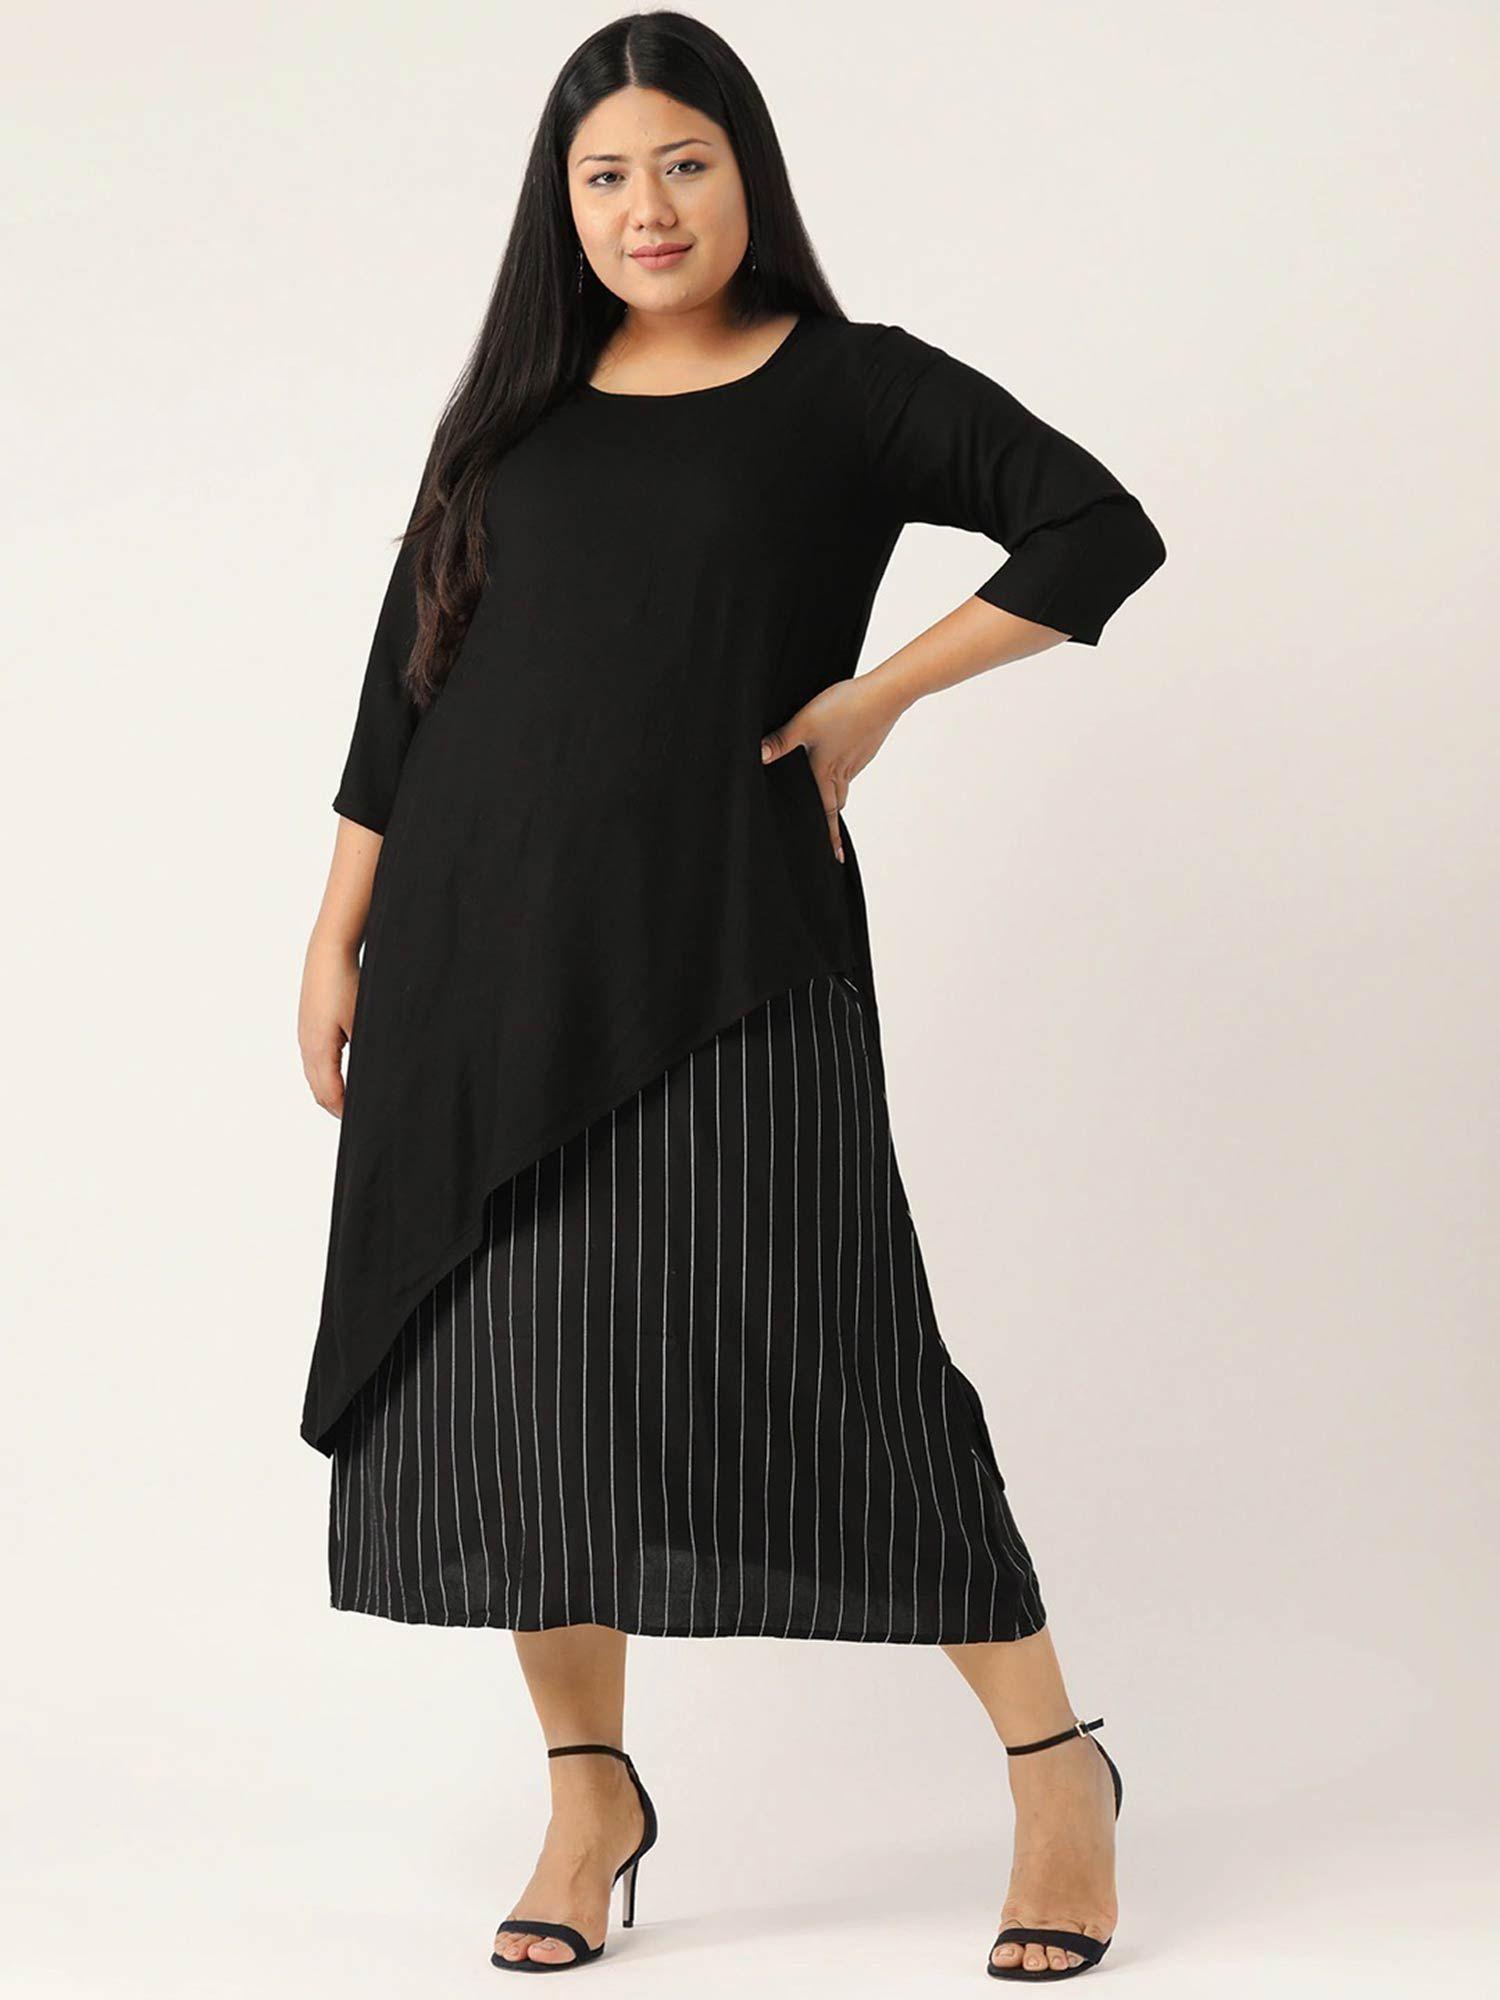 Plus Size Womens Black & White Striped Layered A-Line Dress